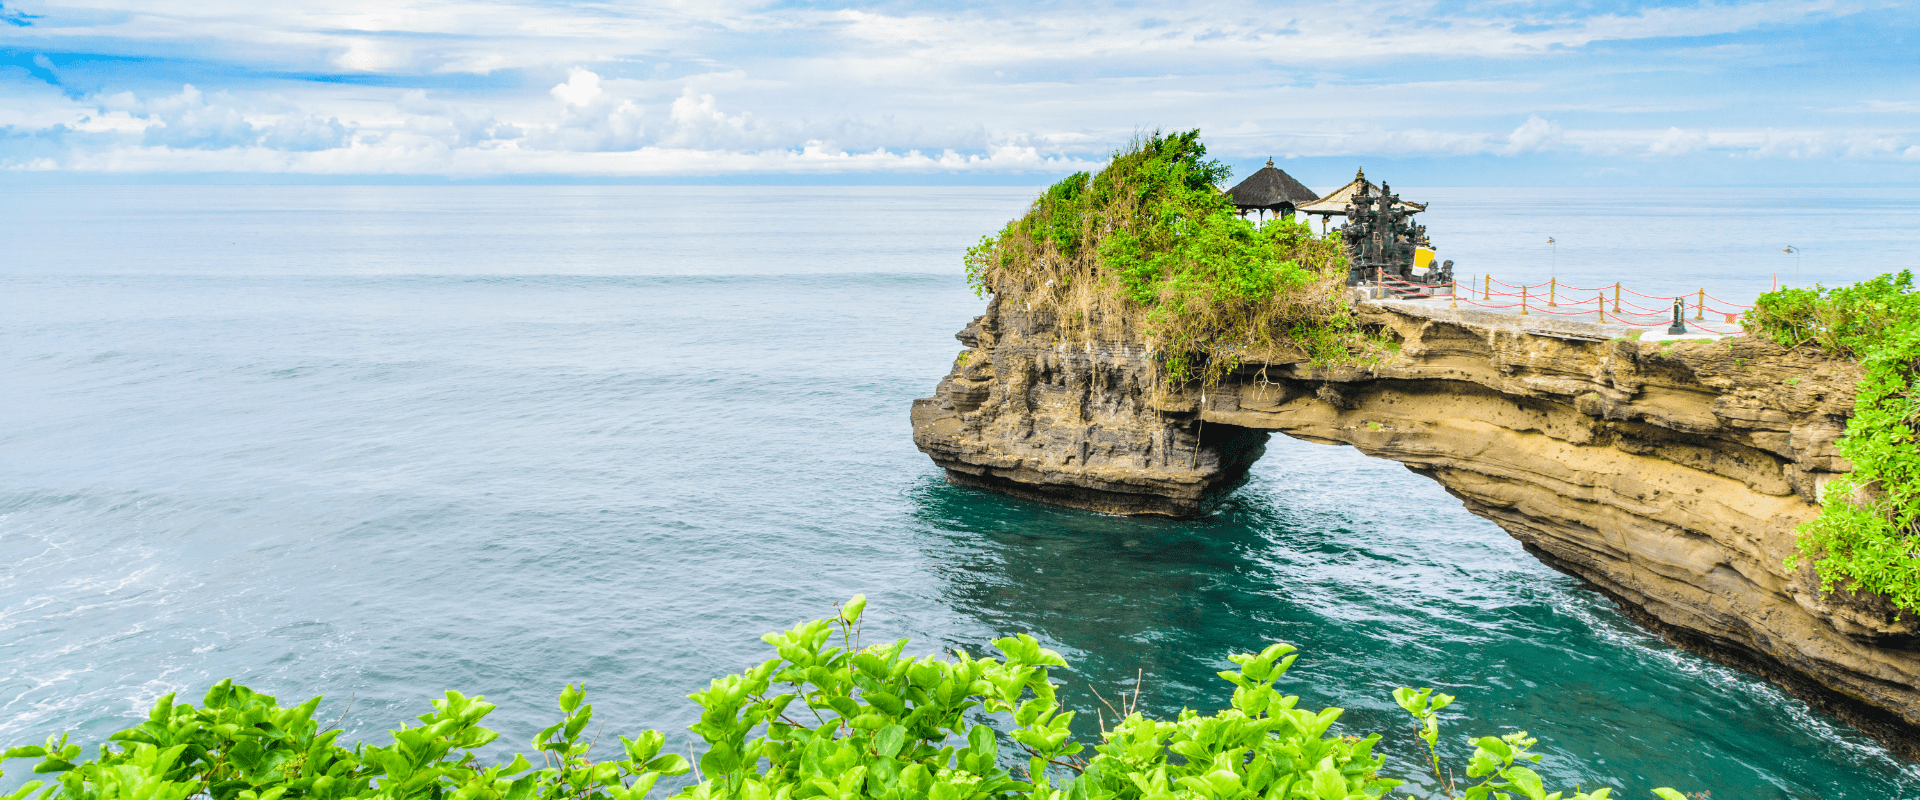 Bali Cultural Premium  Adventure